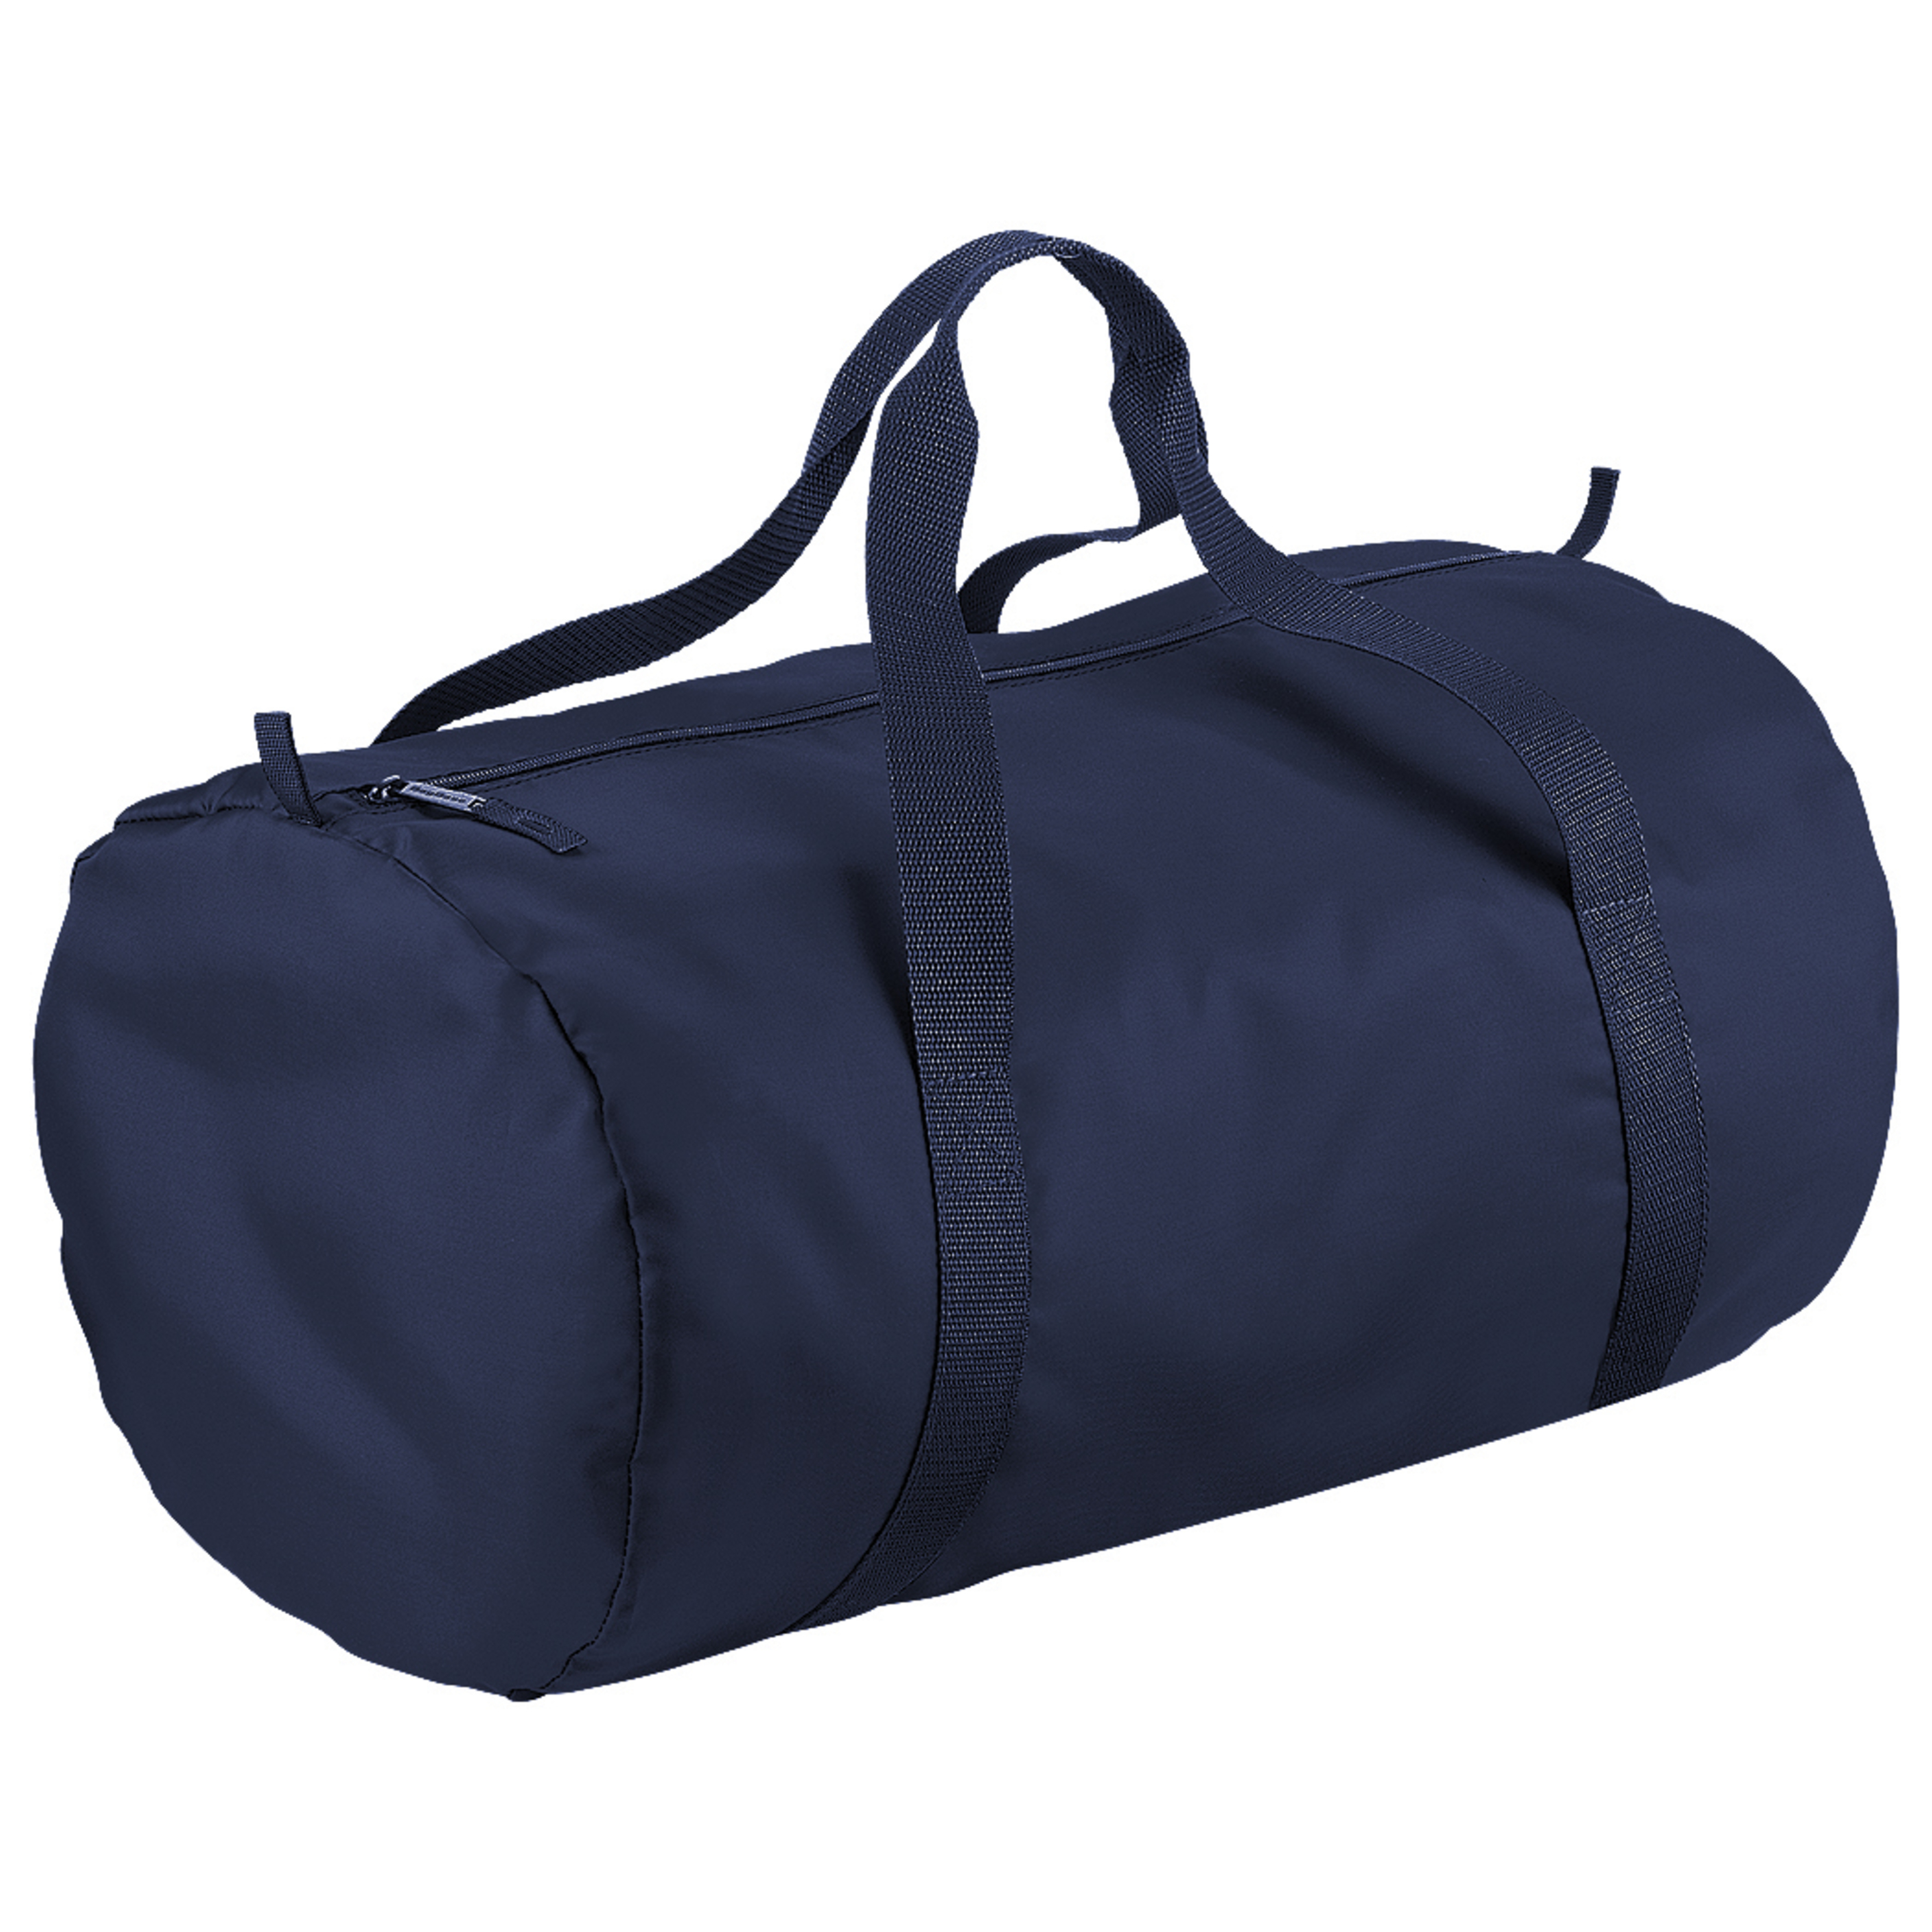 Bolsa De Deporte / De Viaje Impermeable Modelo Barrel Packaway (32 Litros) Bagbase (Azul)